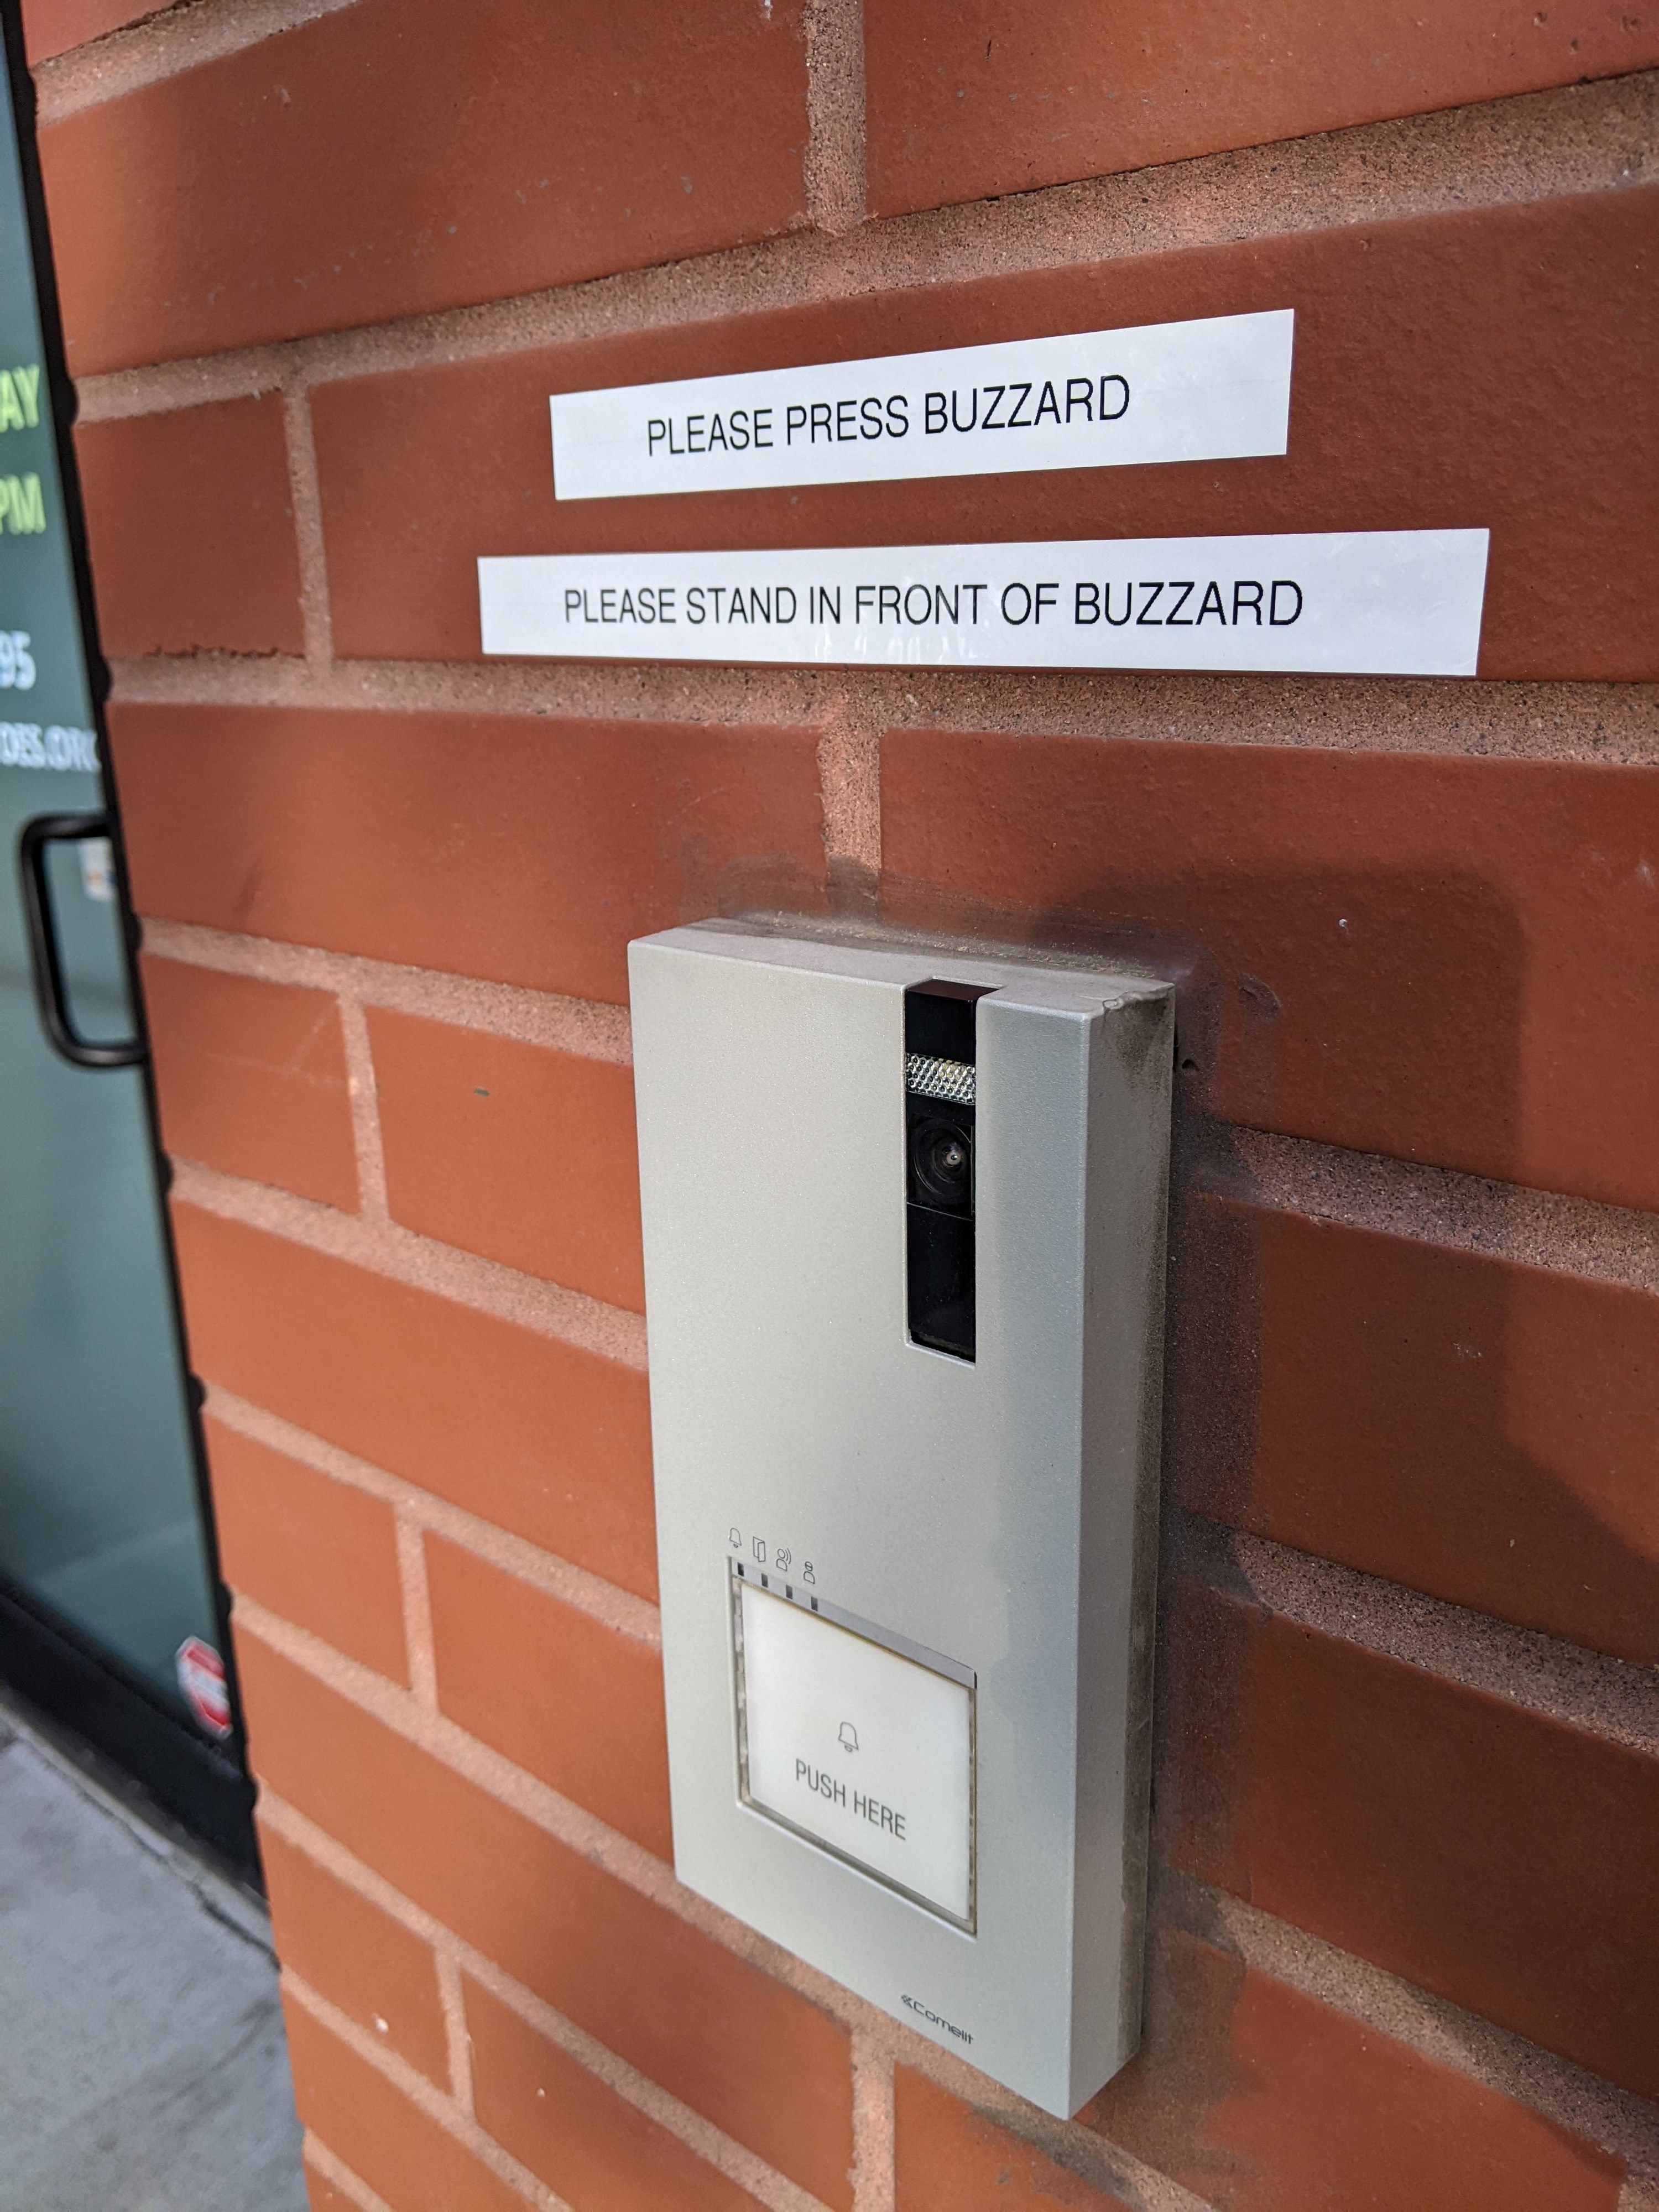 buzzer mispelled as buzzard